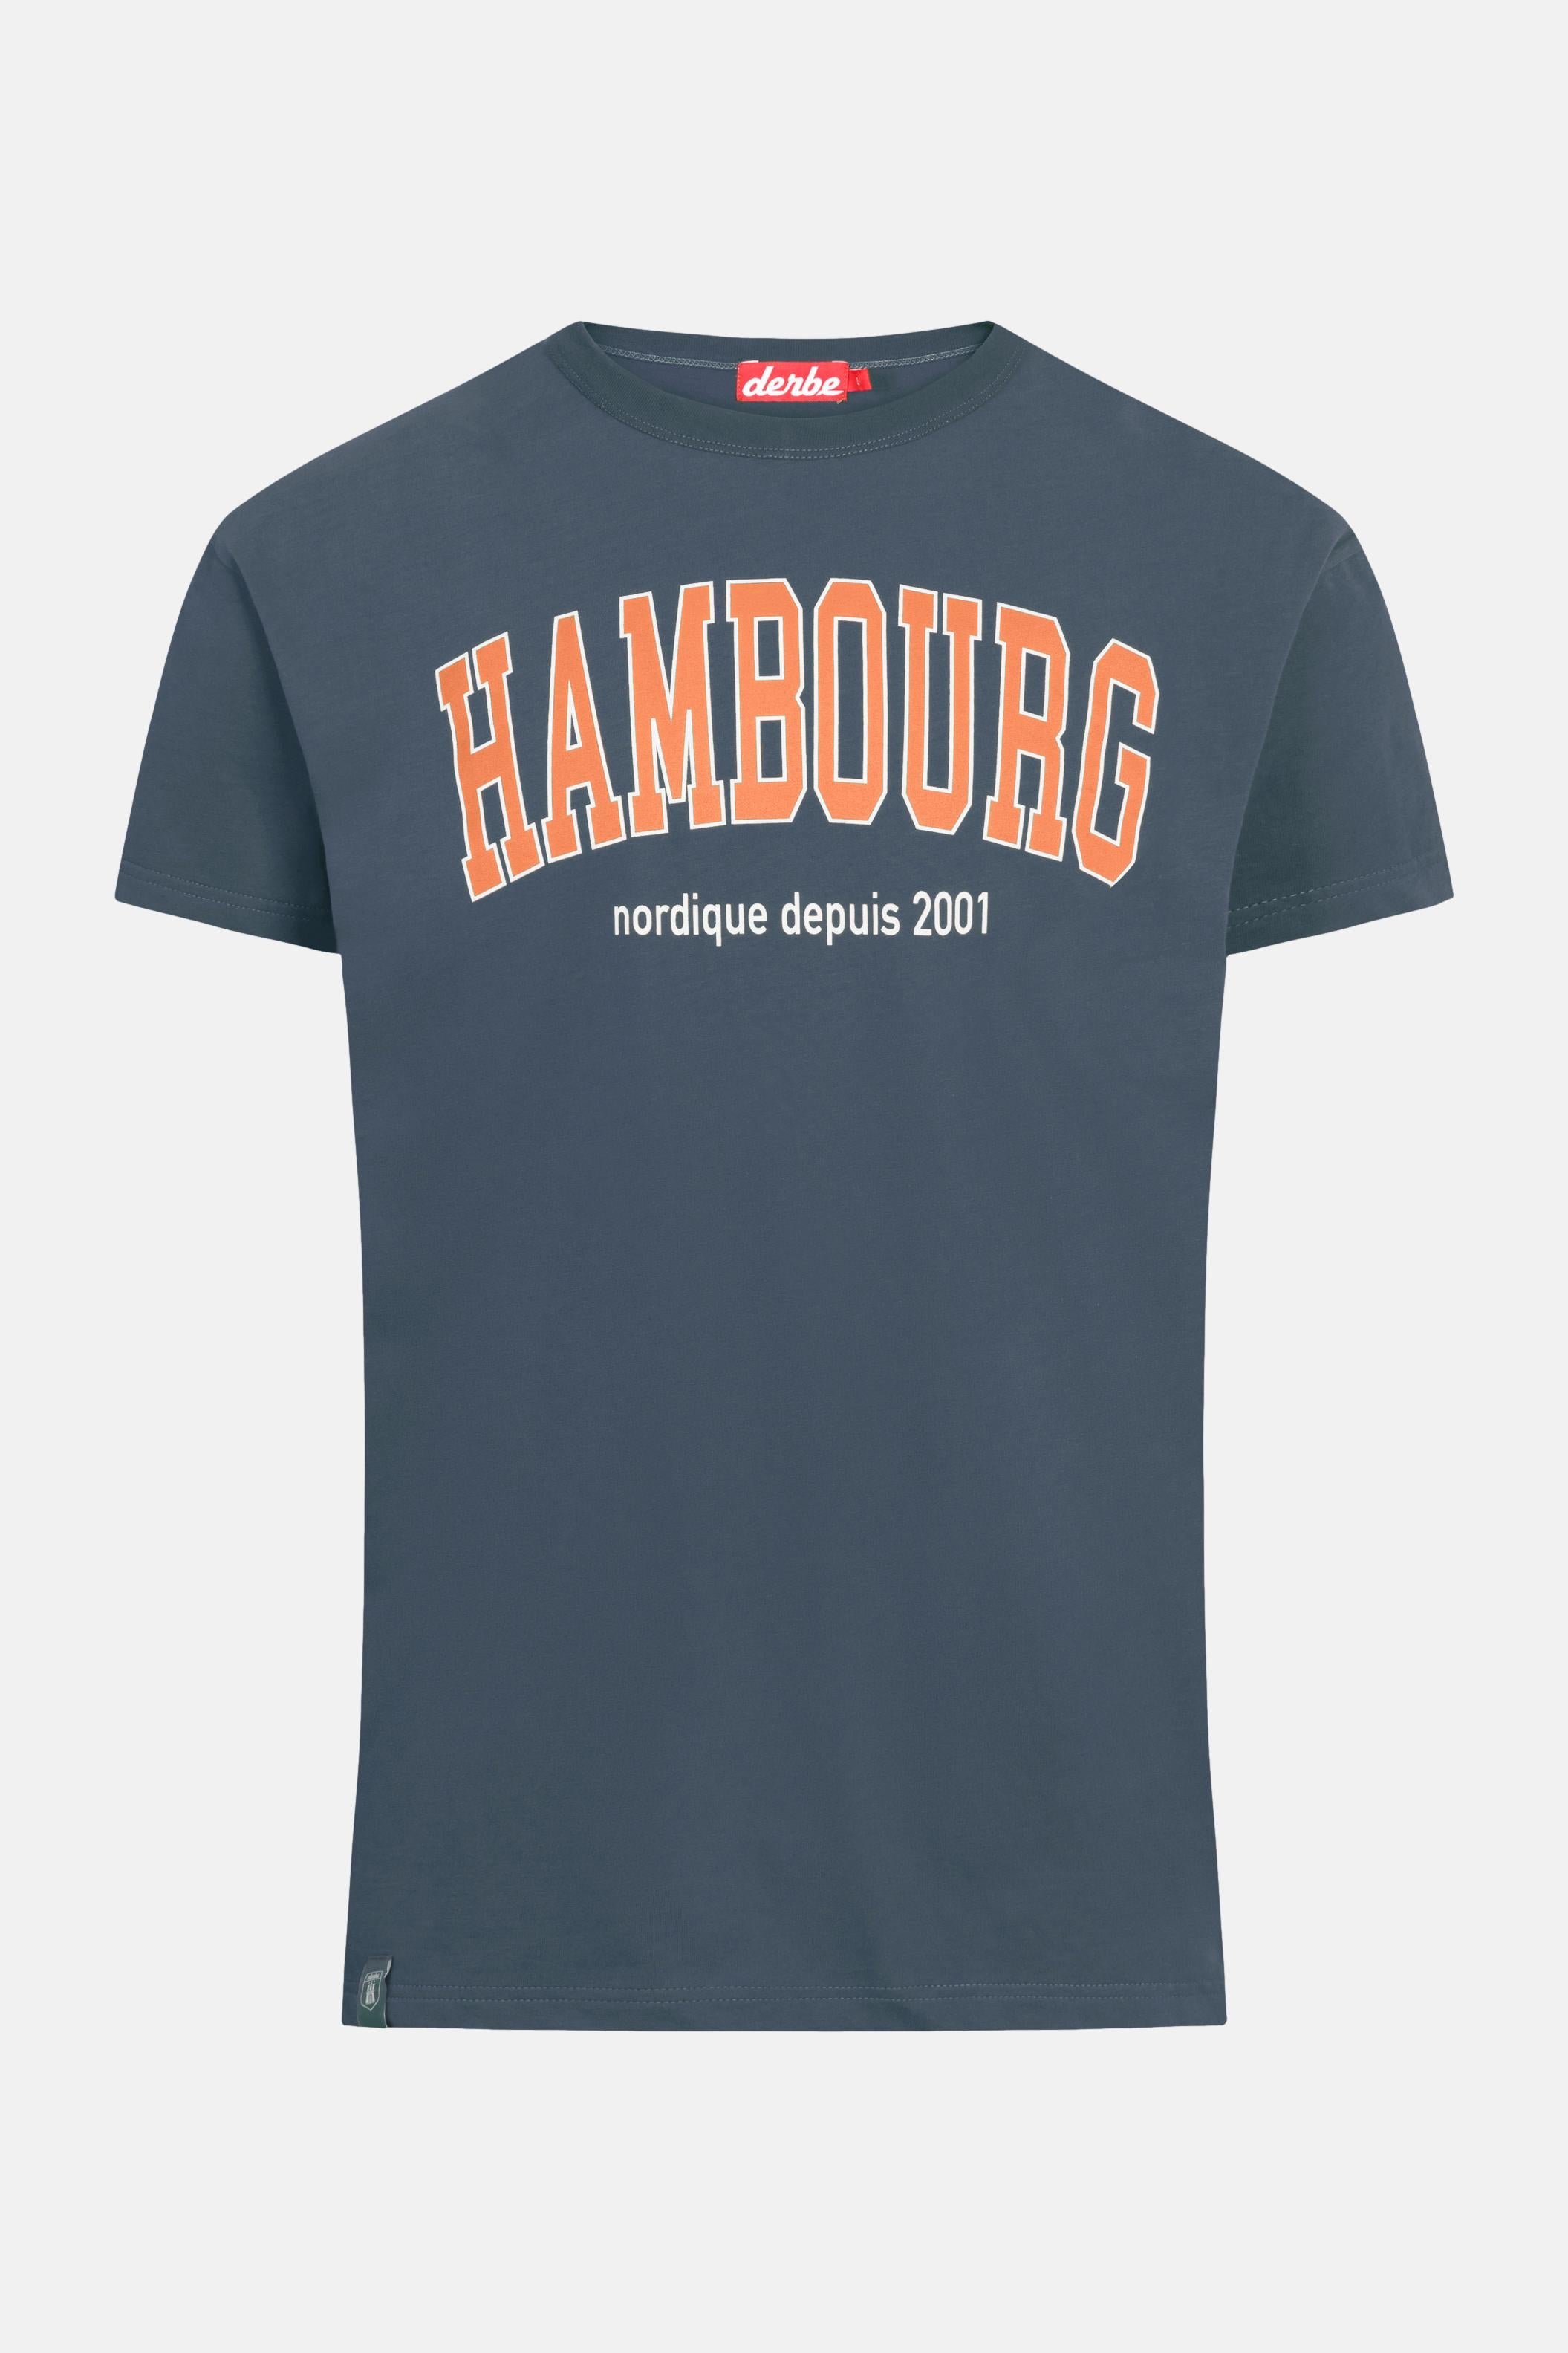 DERBE Hambourg Herren T-Shirt, Navy Dunkelblau